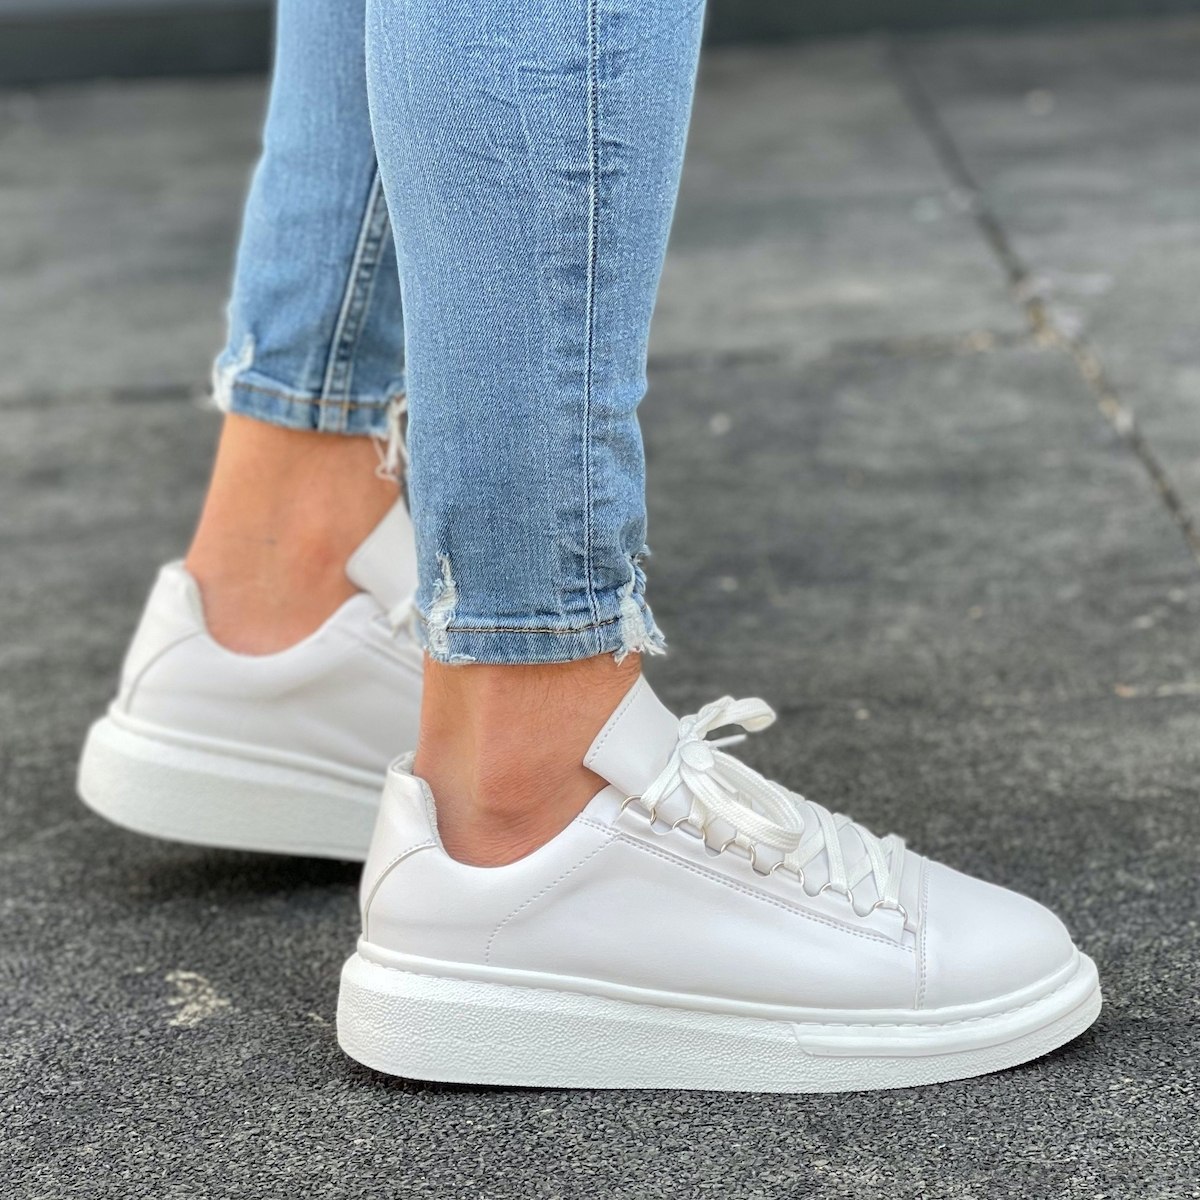 Buy Women's White Sneakers High-Sole-5cm-Light Walking Shoes Sneakers |  online store of Turkish goods TT-Turk